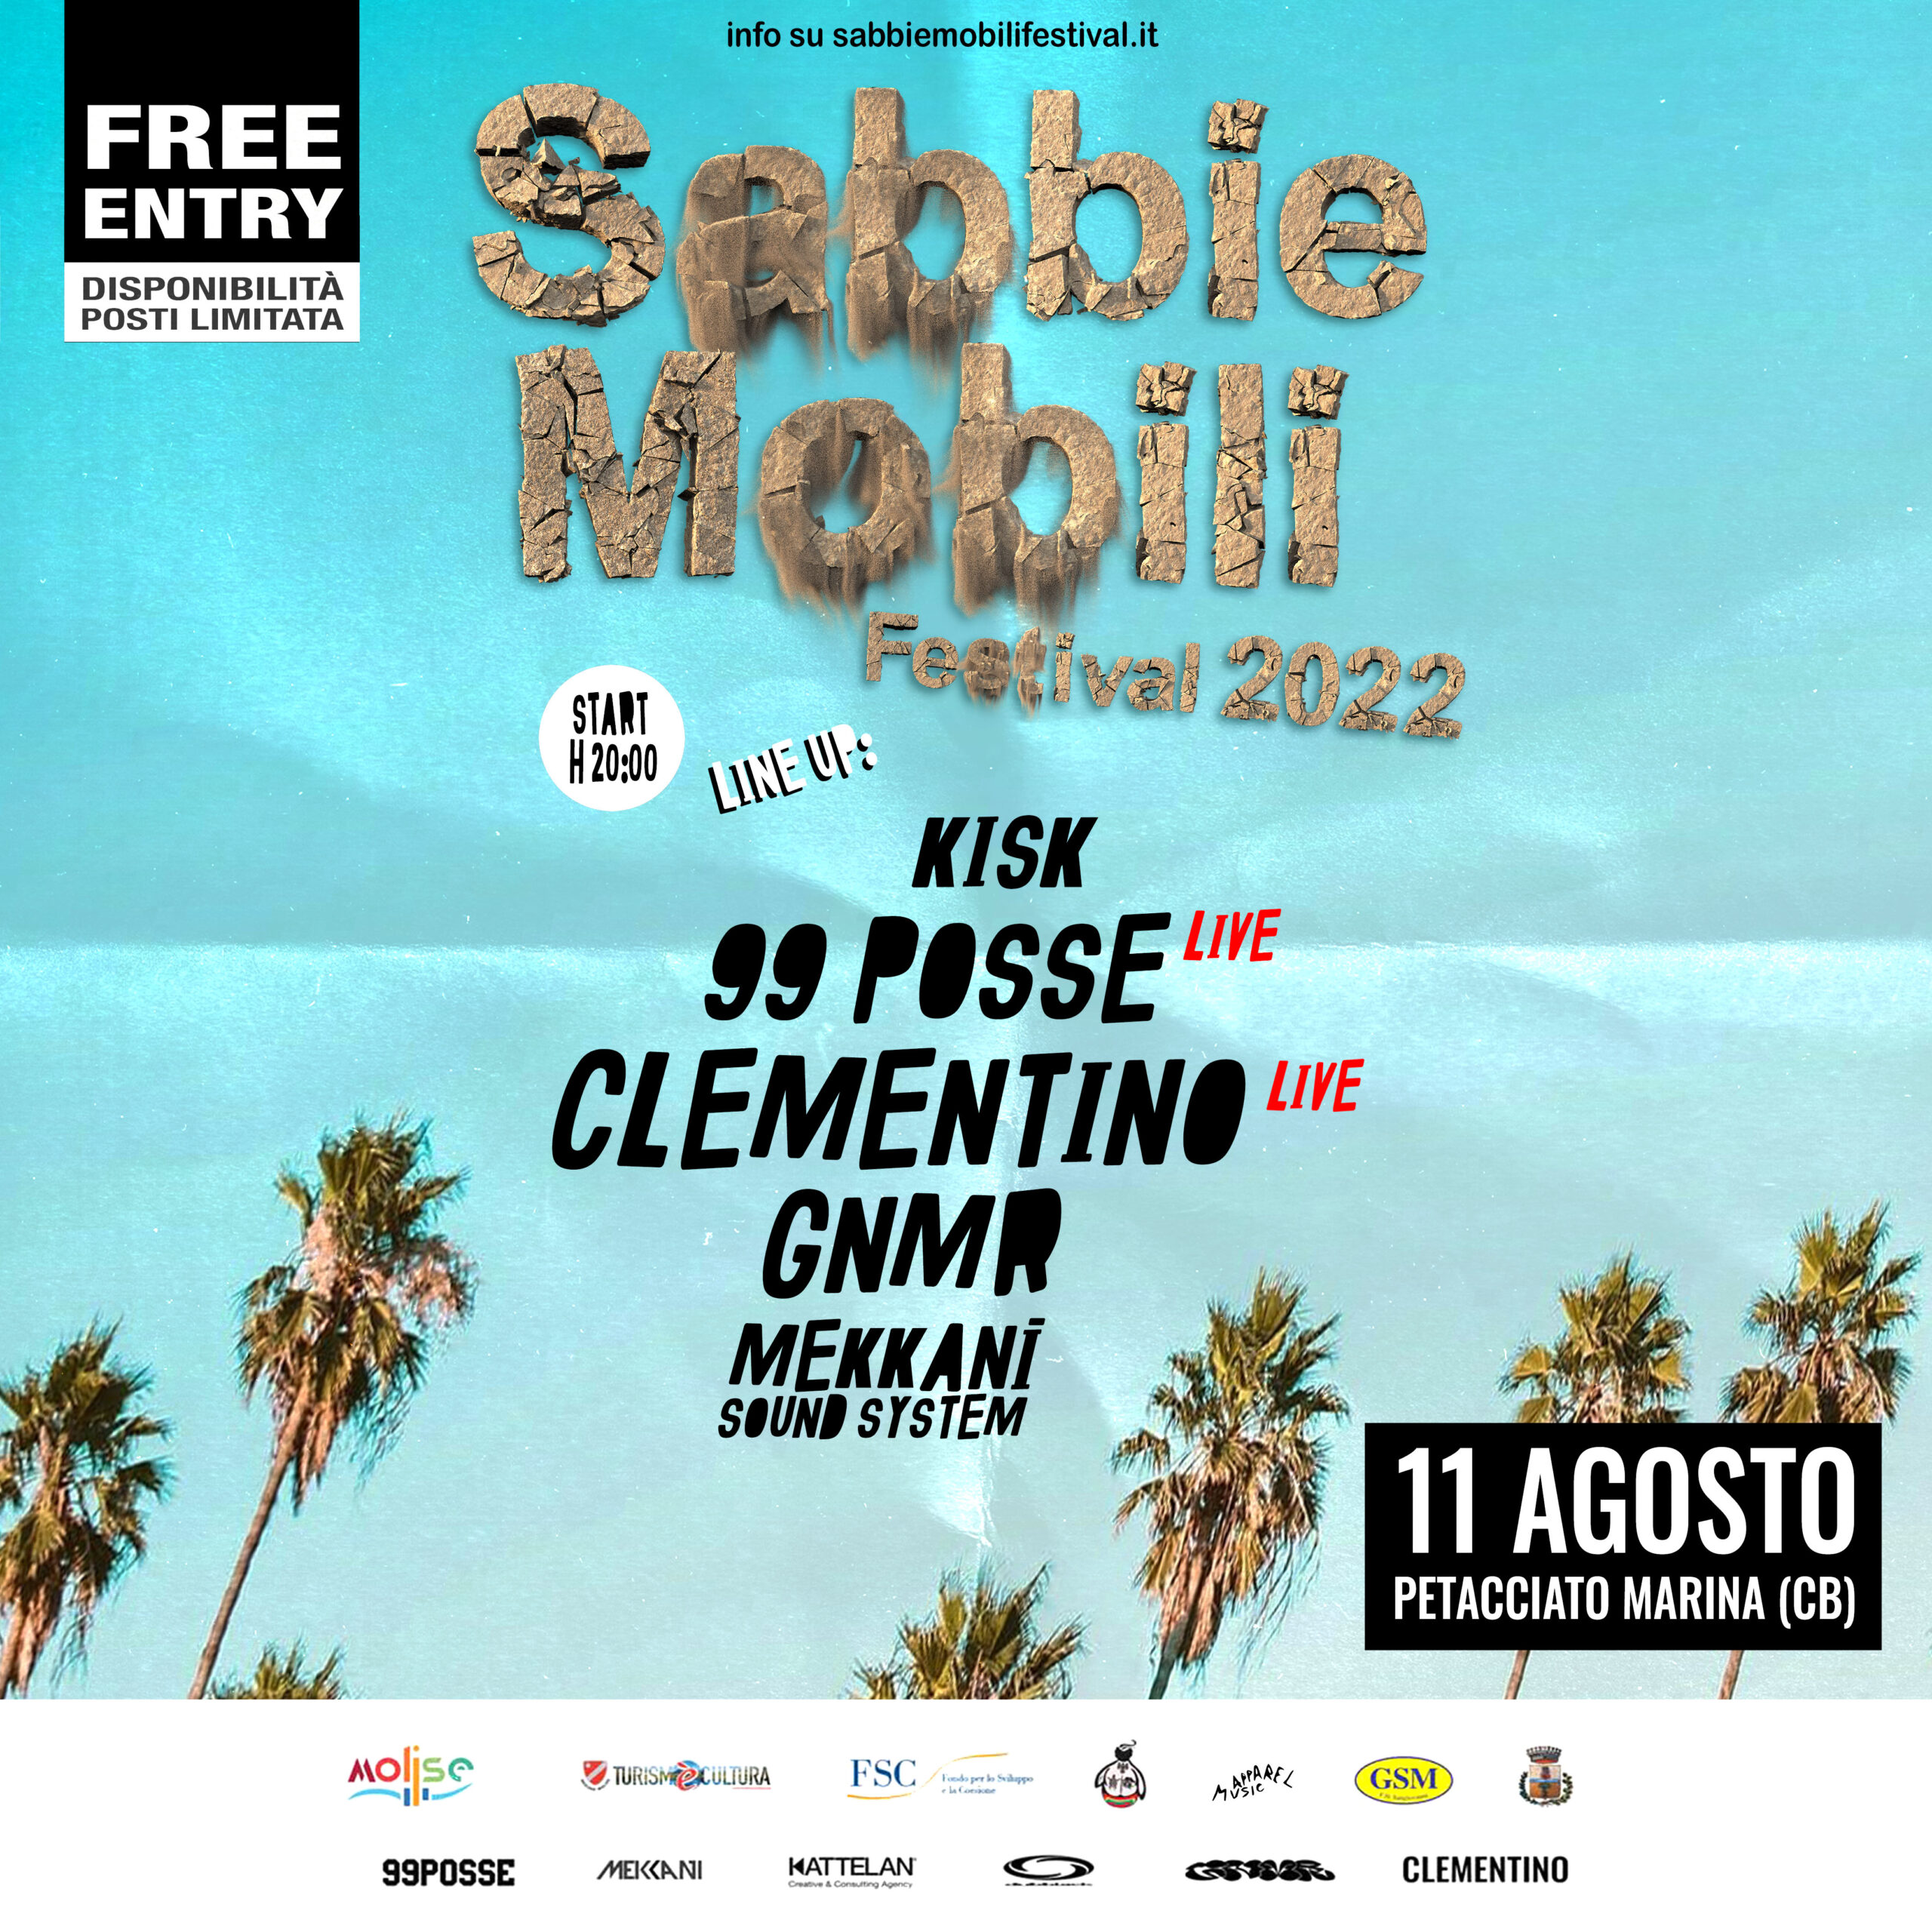 Kisk at Sabbie Mobili Festival 22